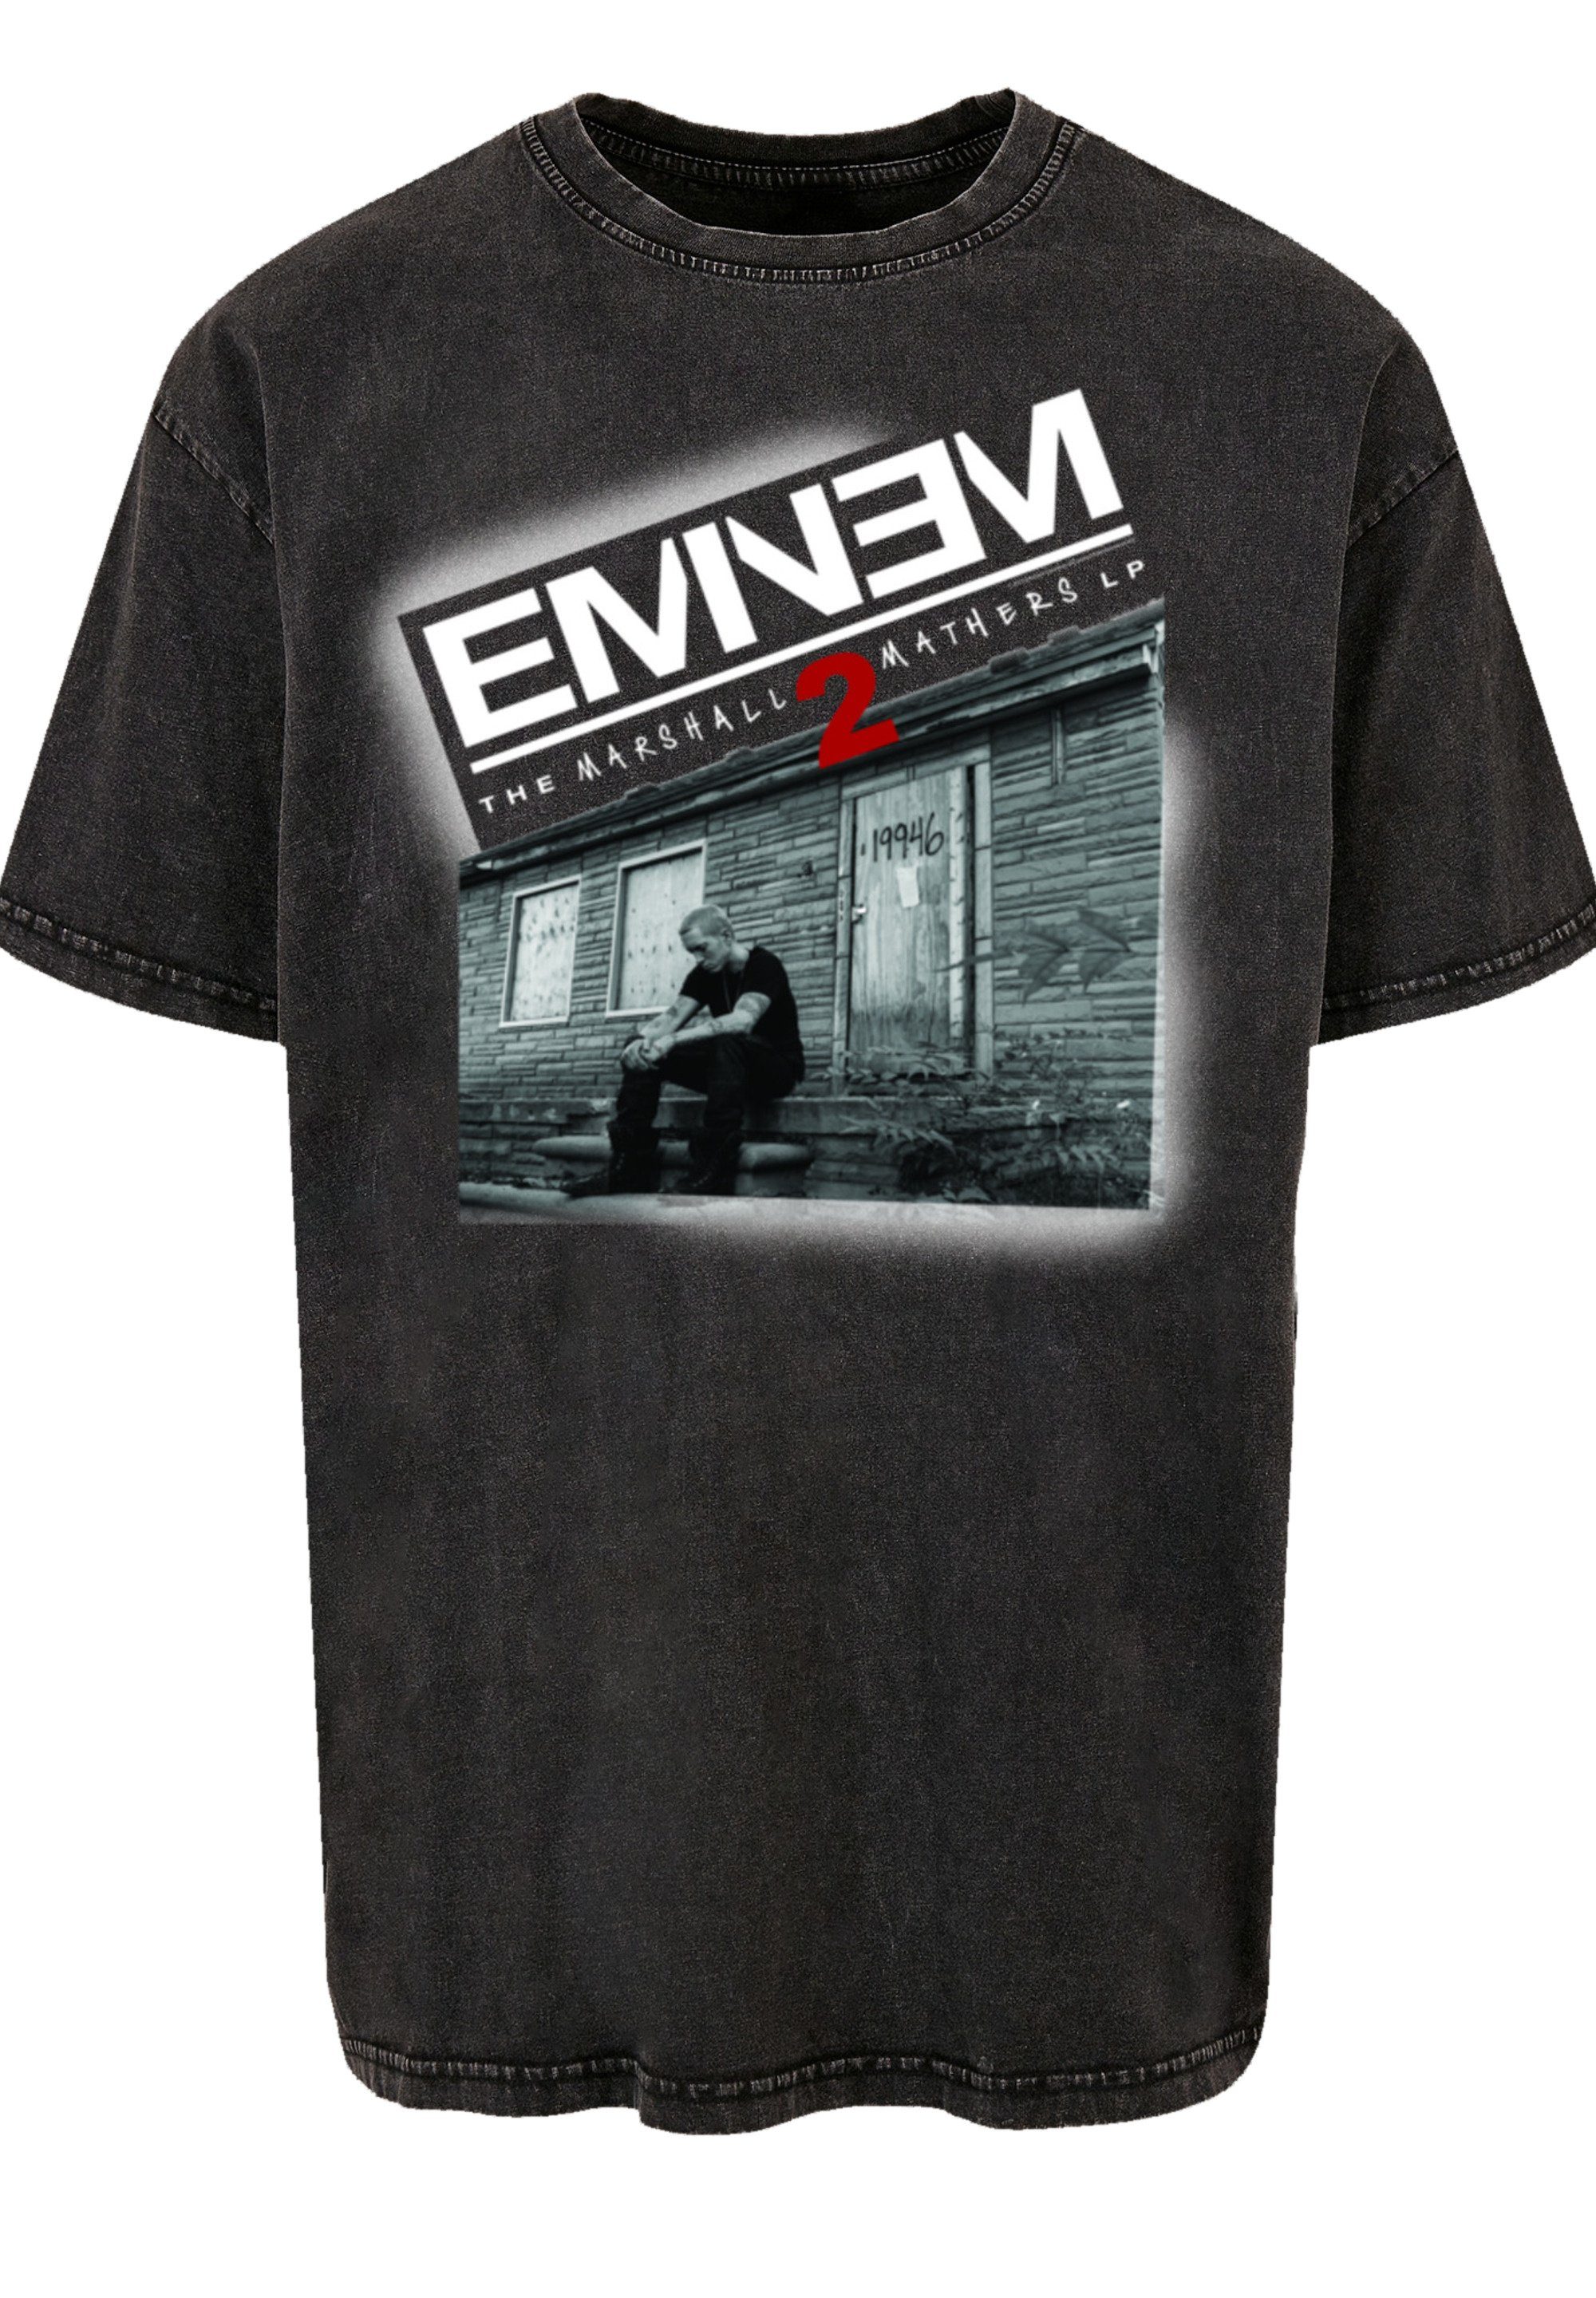 F4NT4STIC T-Shirt Premium Musik 2 Music Qualität, Oldschool Mathers Rap Eminem schwarz Marshall